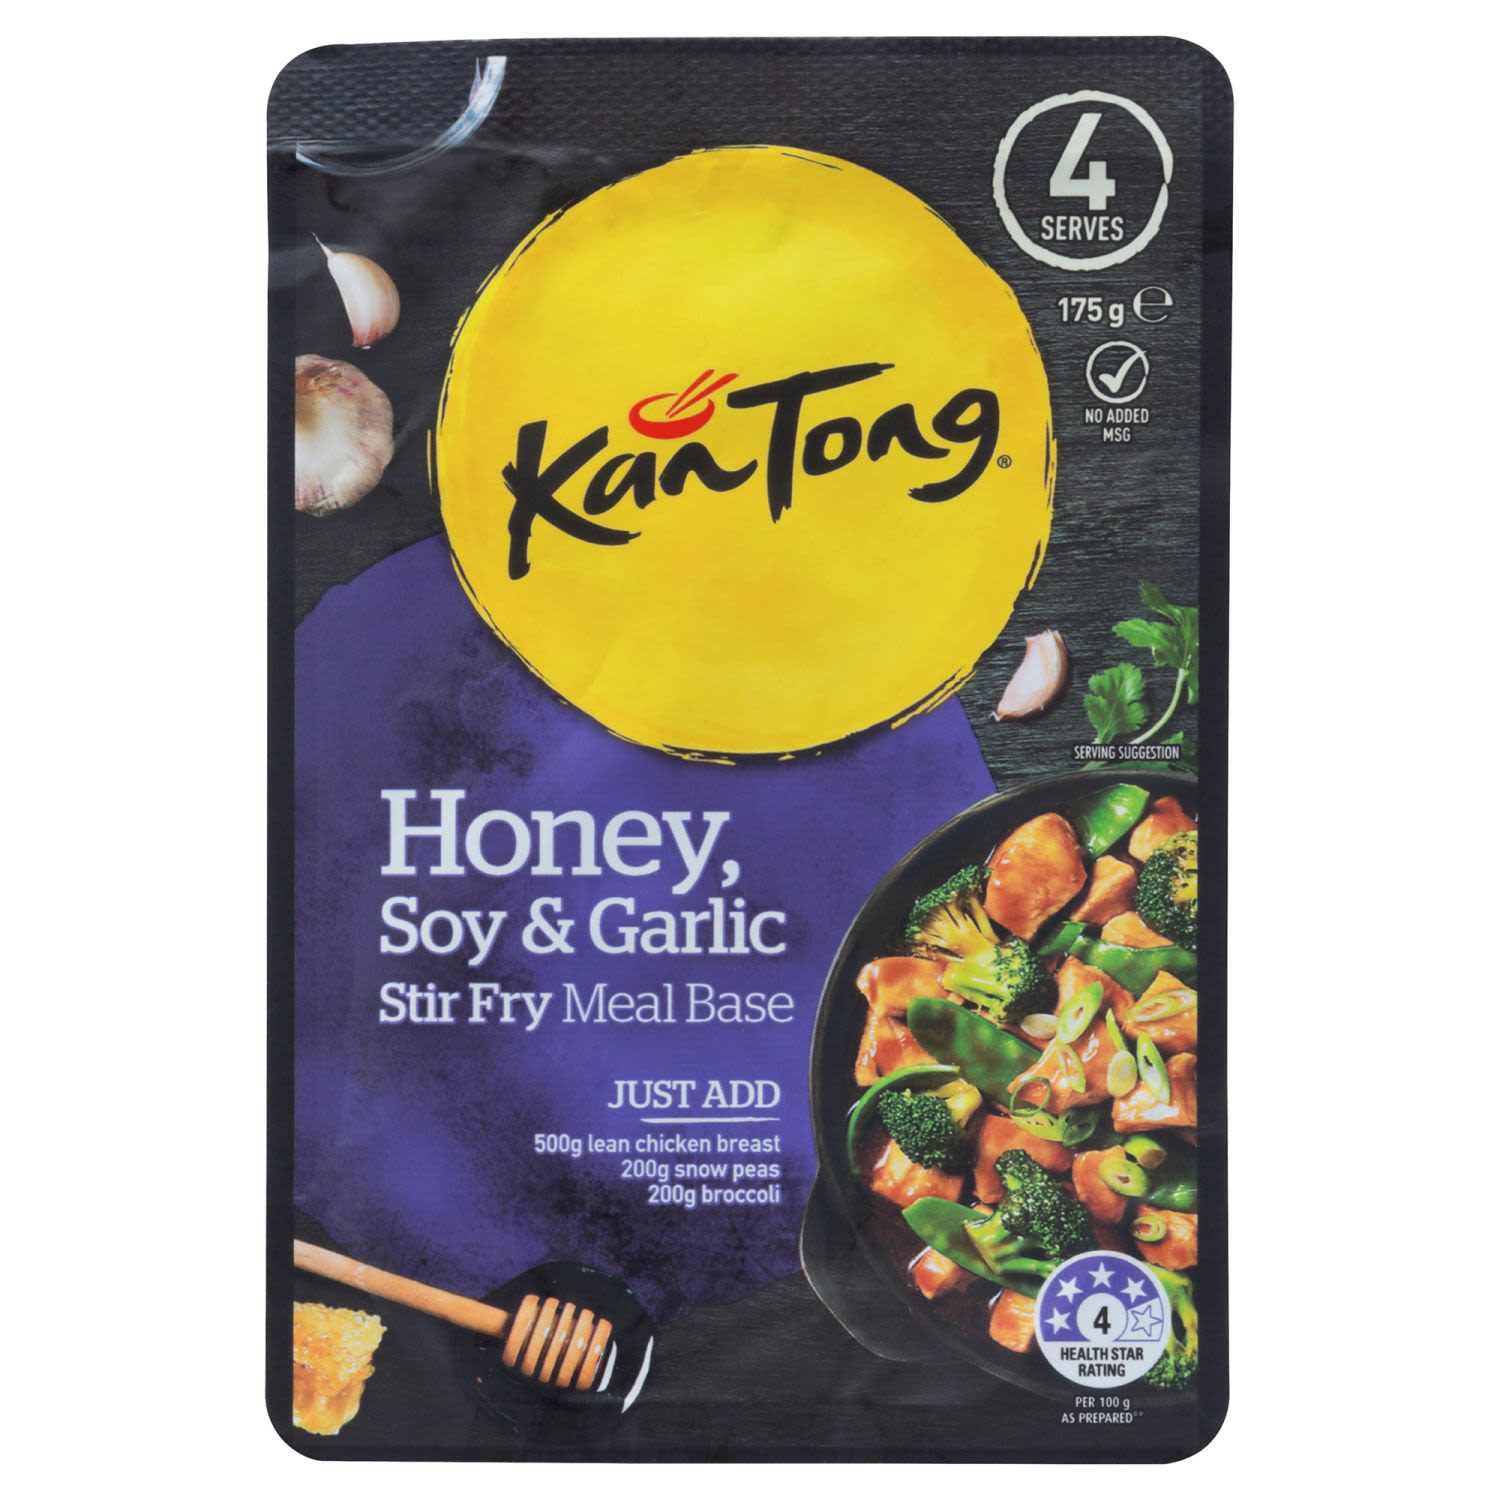 Kan Tong Honey Soy & Garlic Meal Base Pouch, 175 Gram